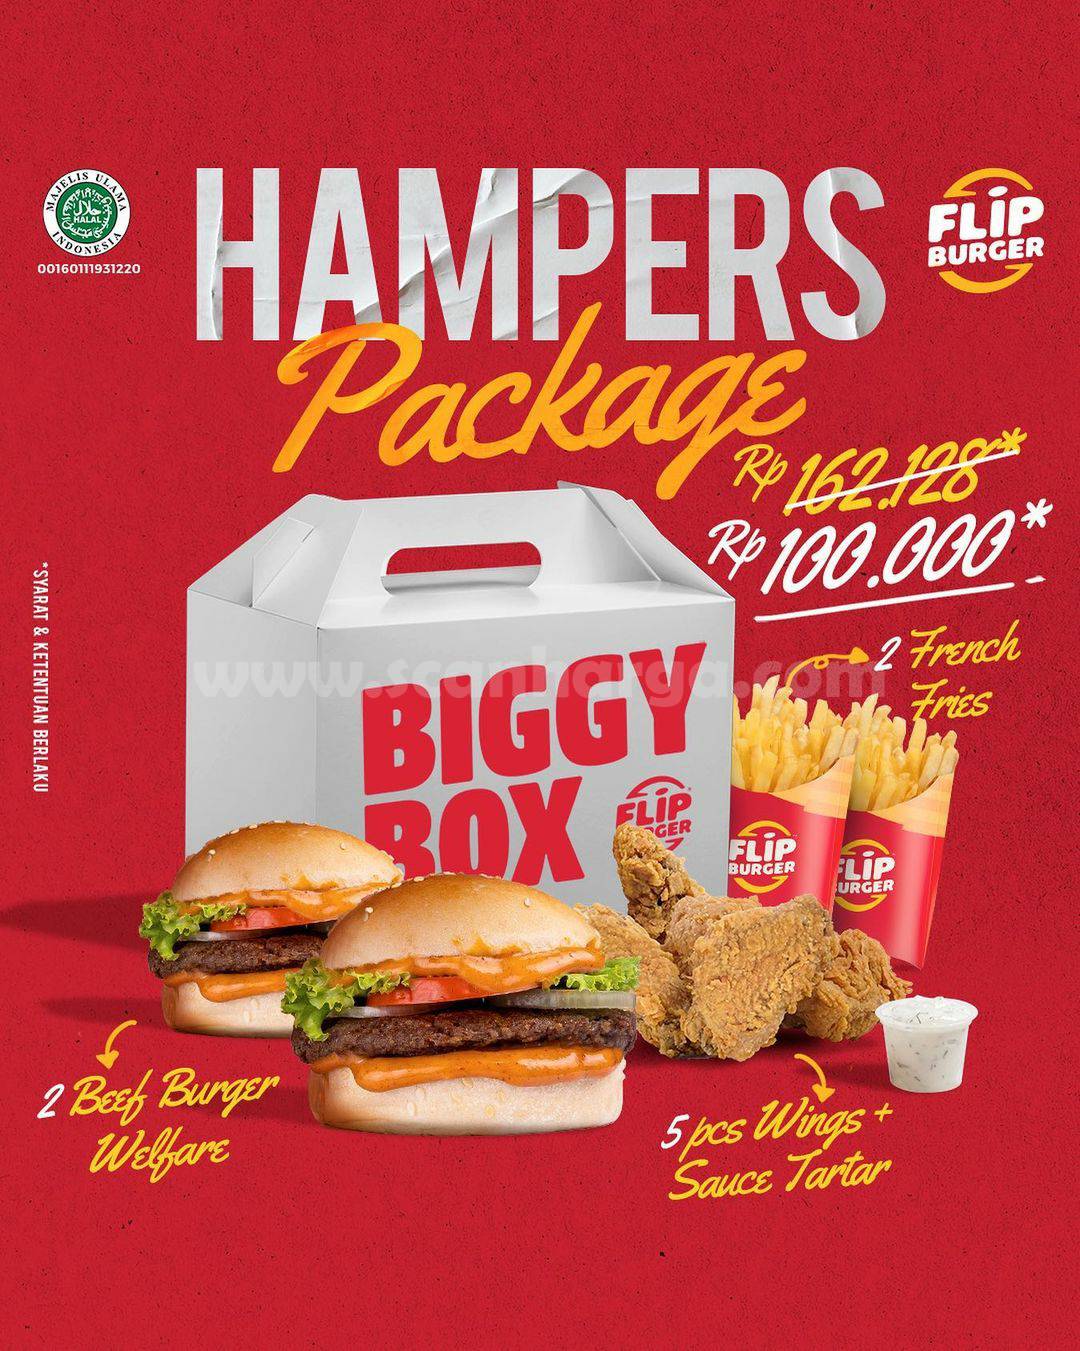 Promo FLIP BURGER HAMPERS PACKAGE harga Spesial hanya Rp 100.000